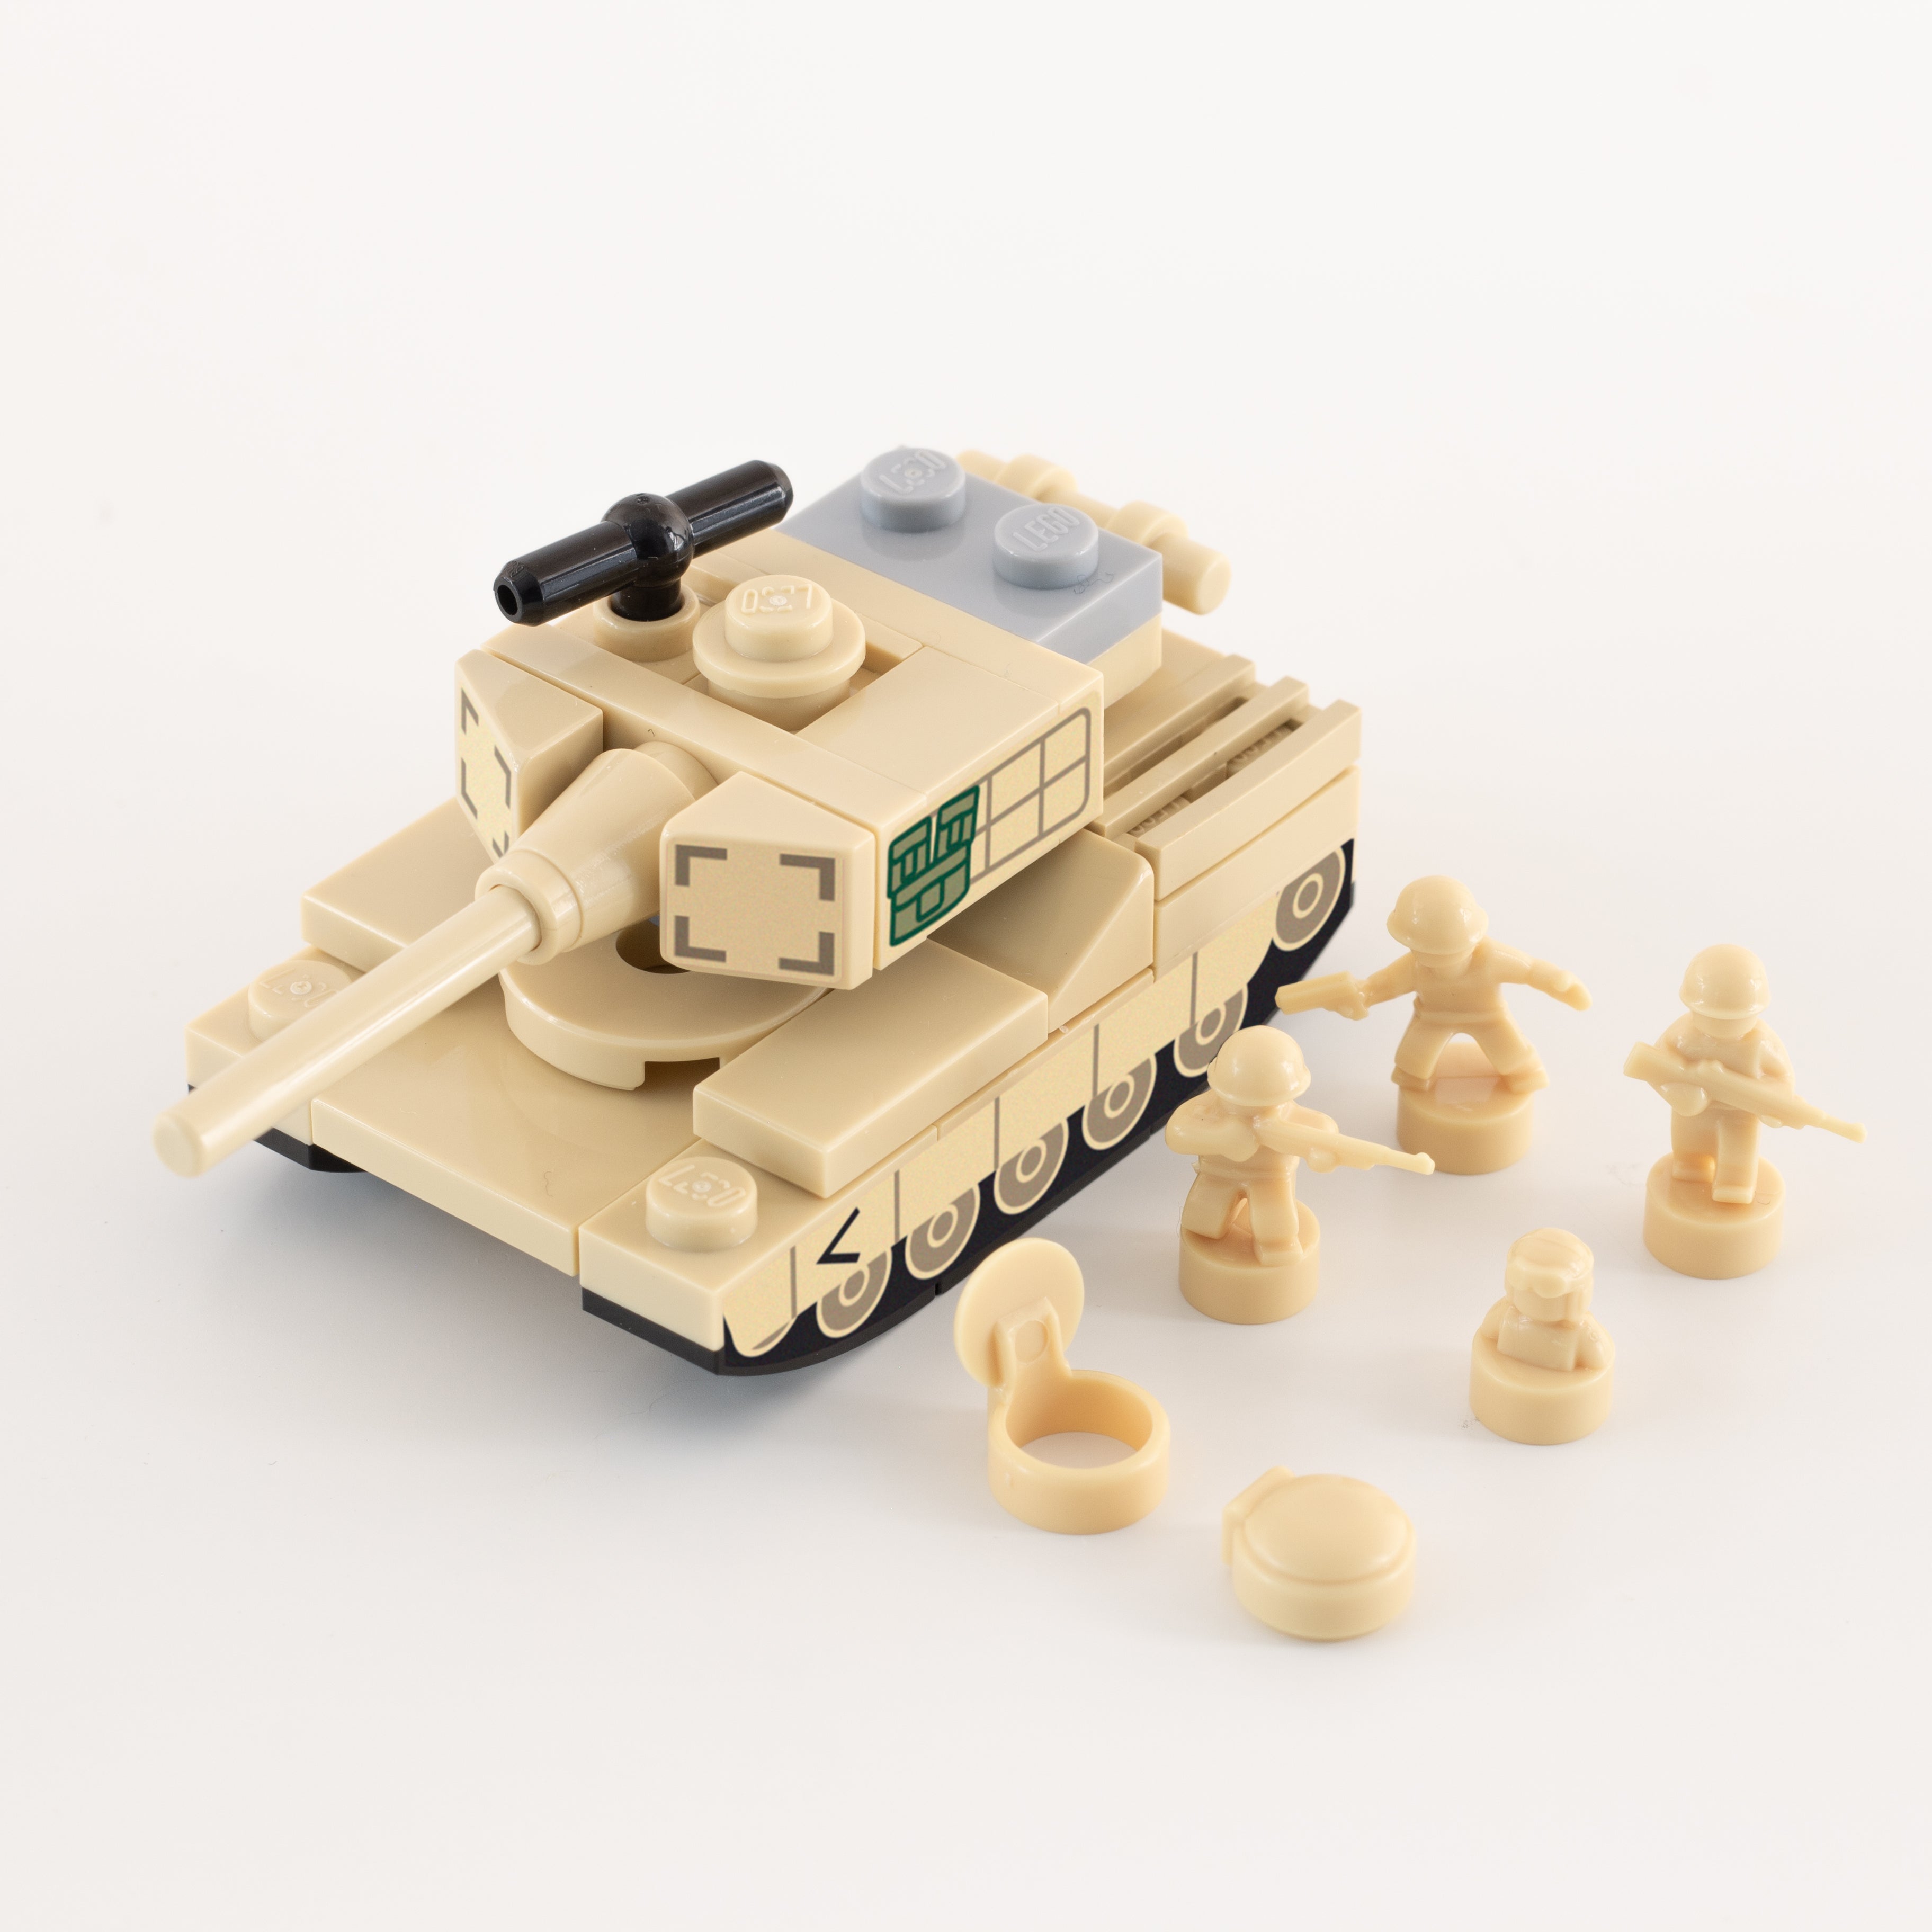 Nano M1 Abrams Tank - Custom Military Set